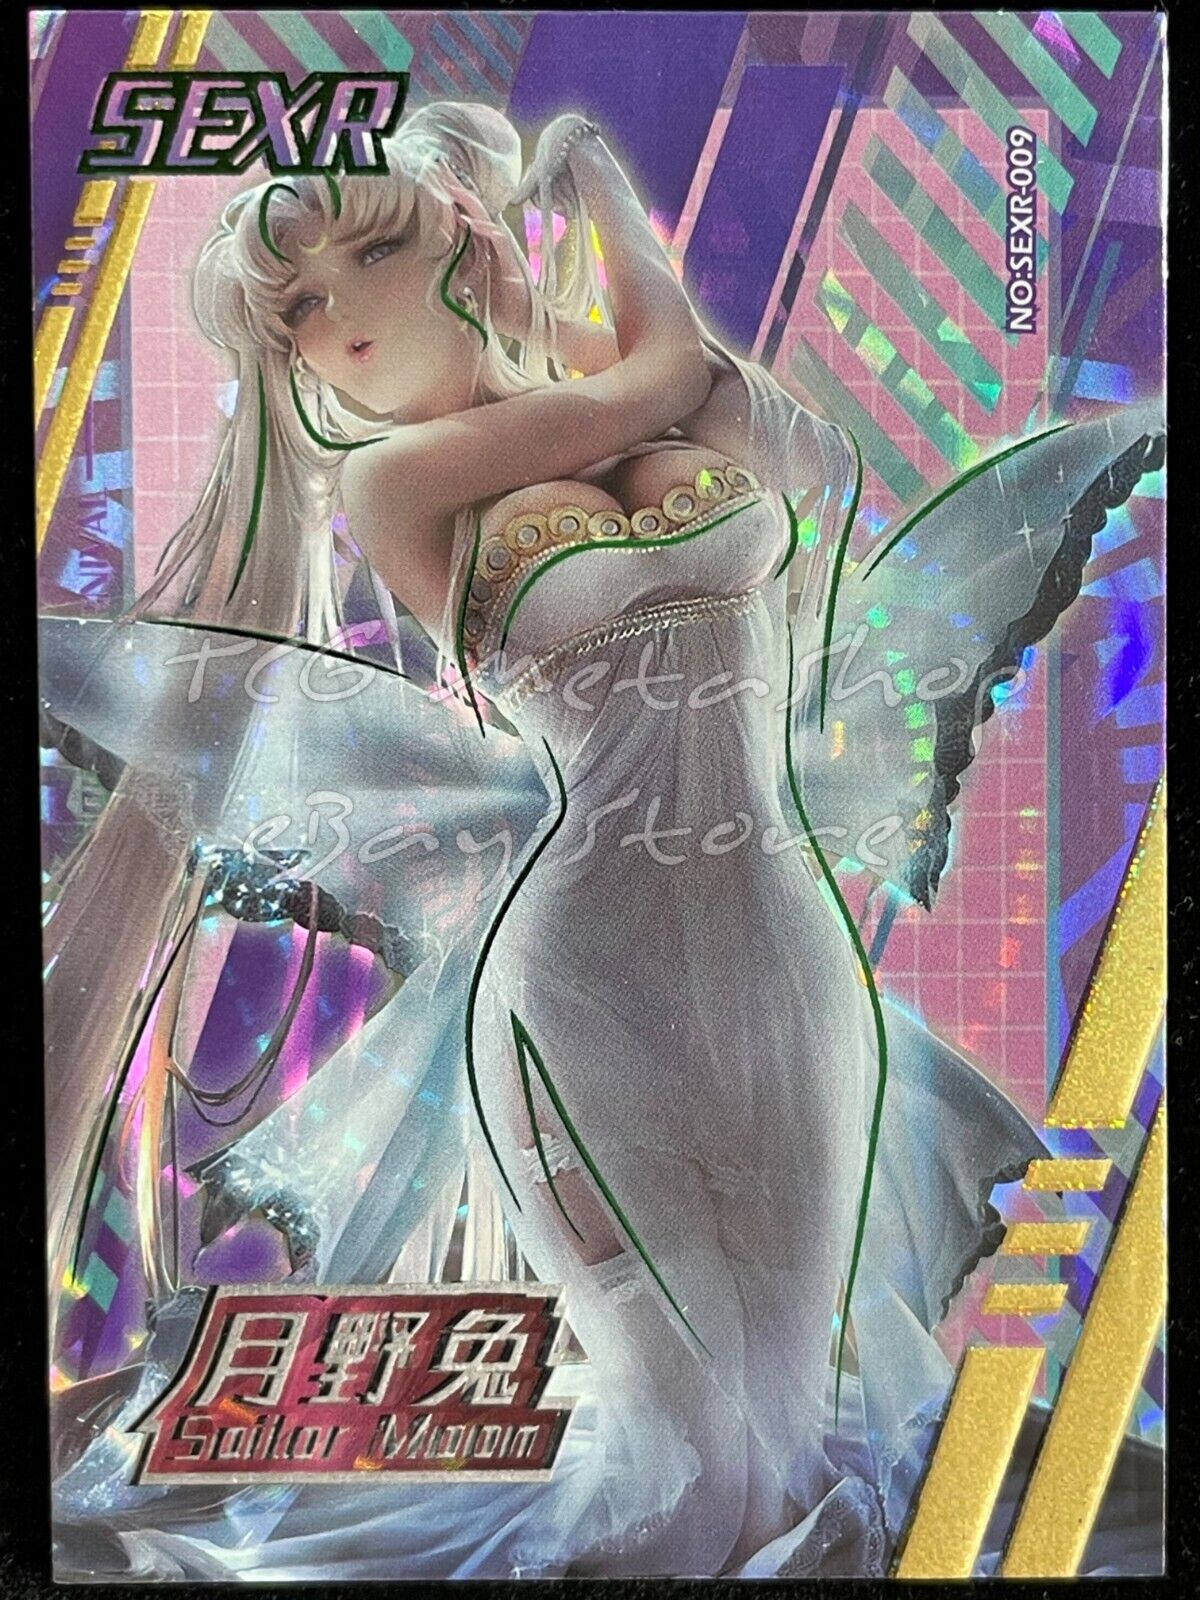 🔥 Goddess Carnival - [Serial #'ed] Pick your card - Anime Waifu Doujin Cards 🔥